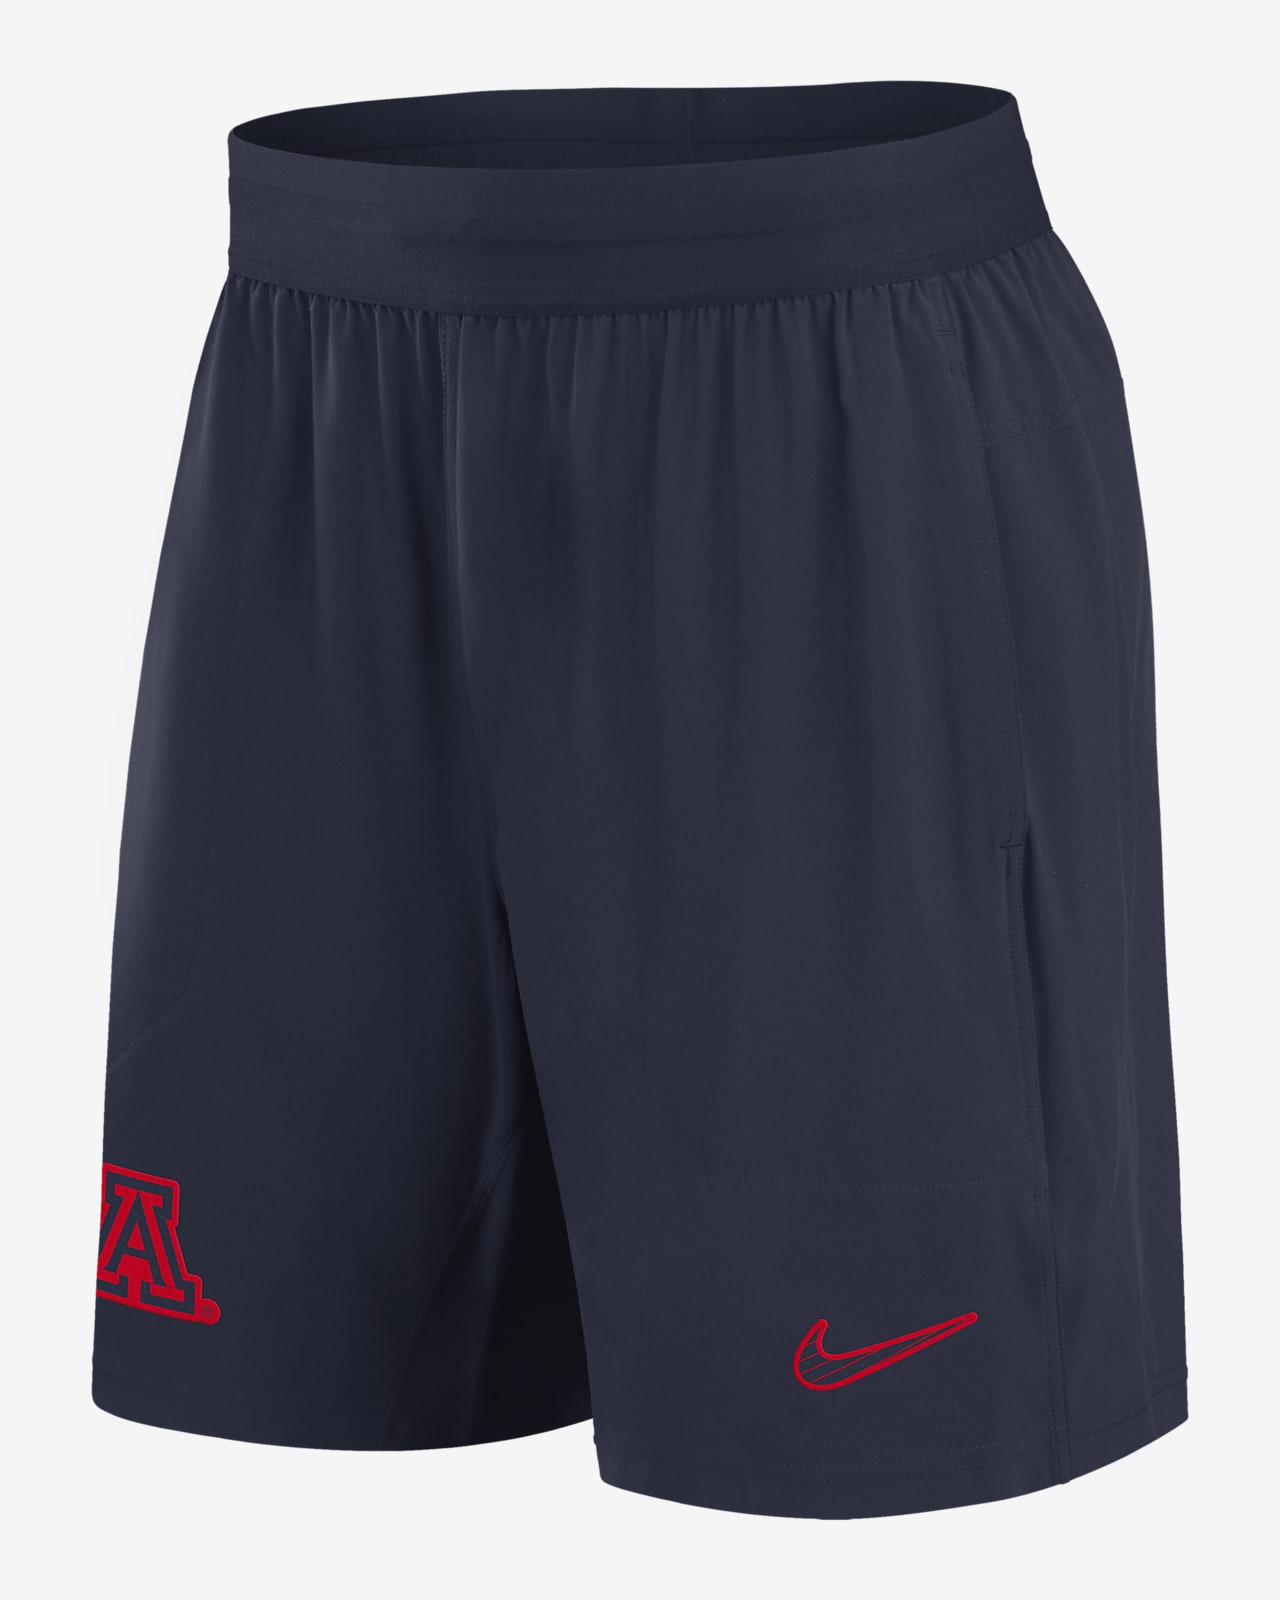 Shorts universitarios Nike Dri-FIT para hombre Arizona Wildcats Sideline